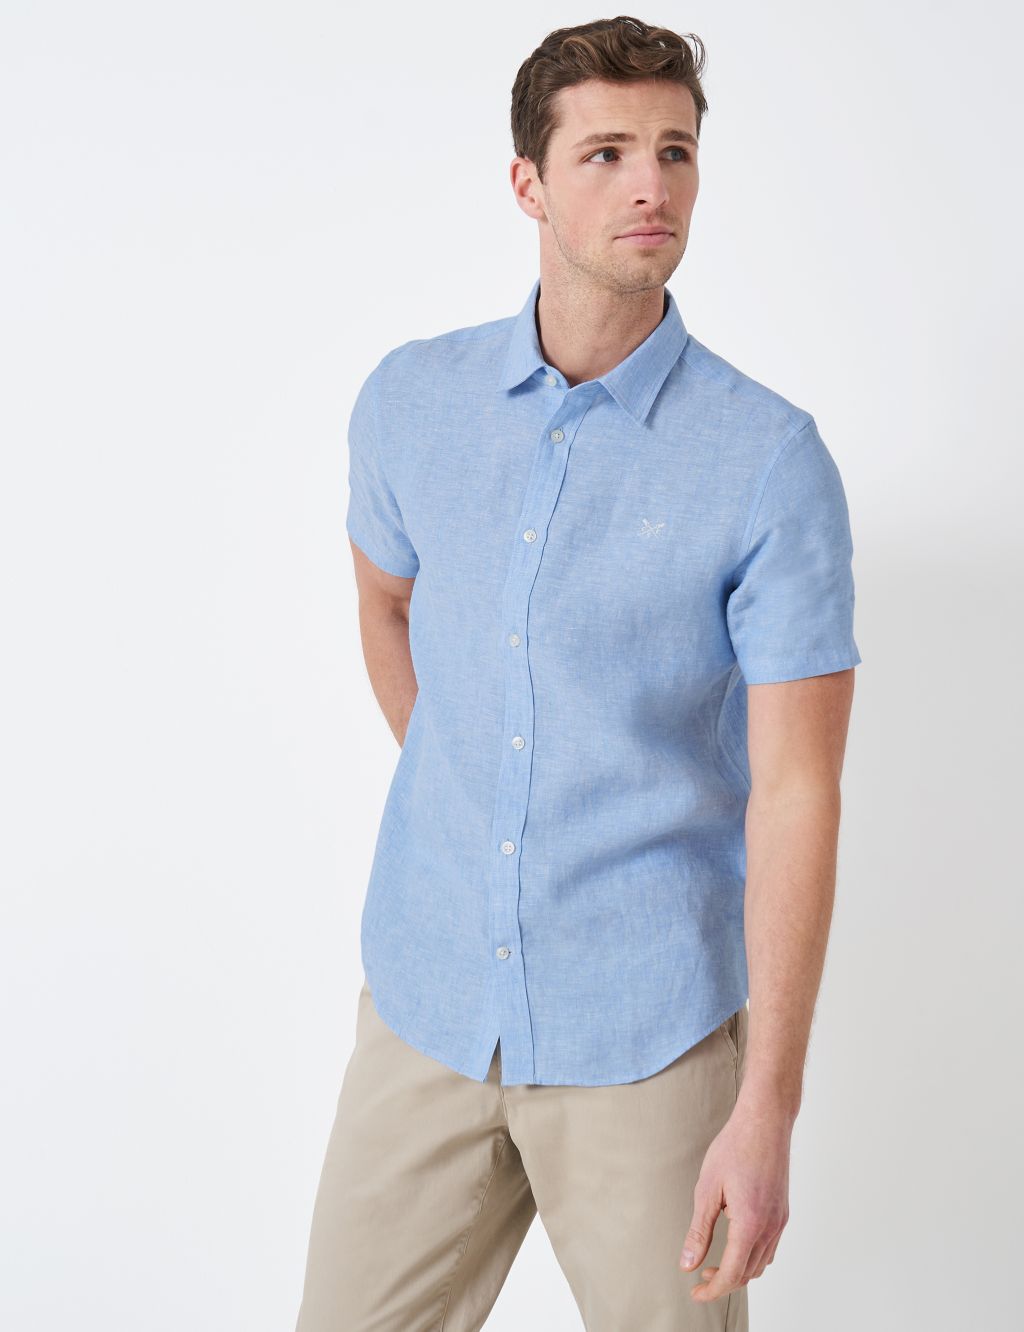 Men’s Formal Linen Shirts | M&S